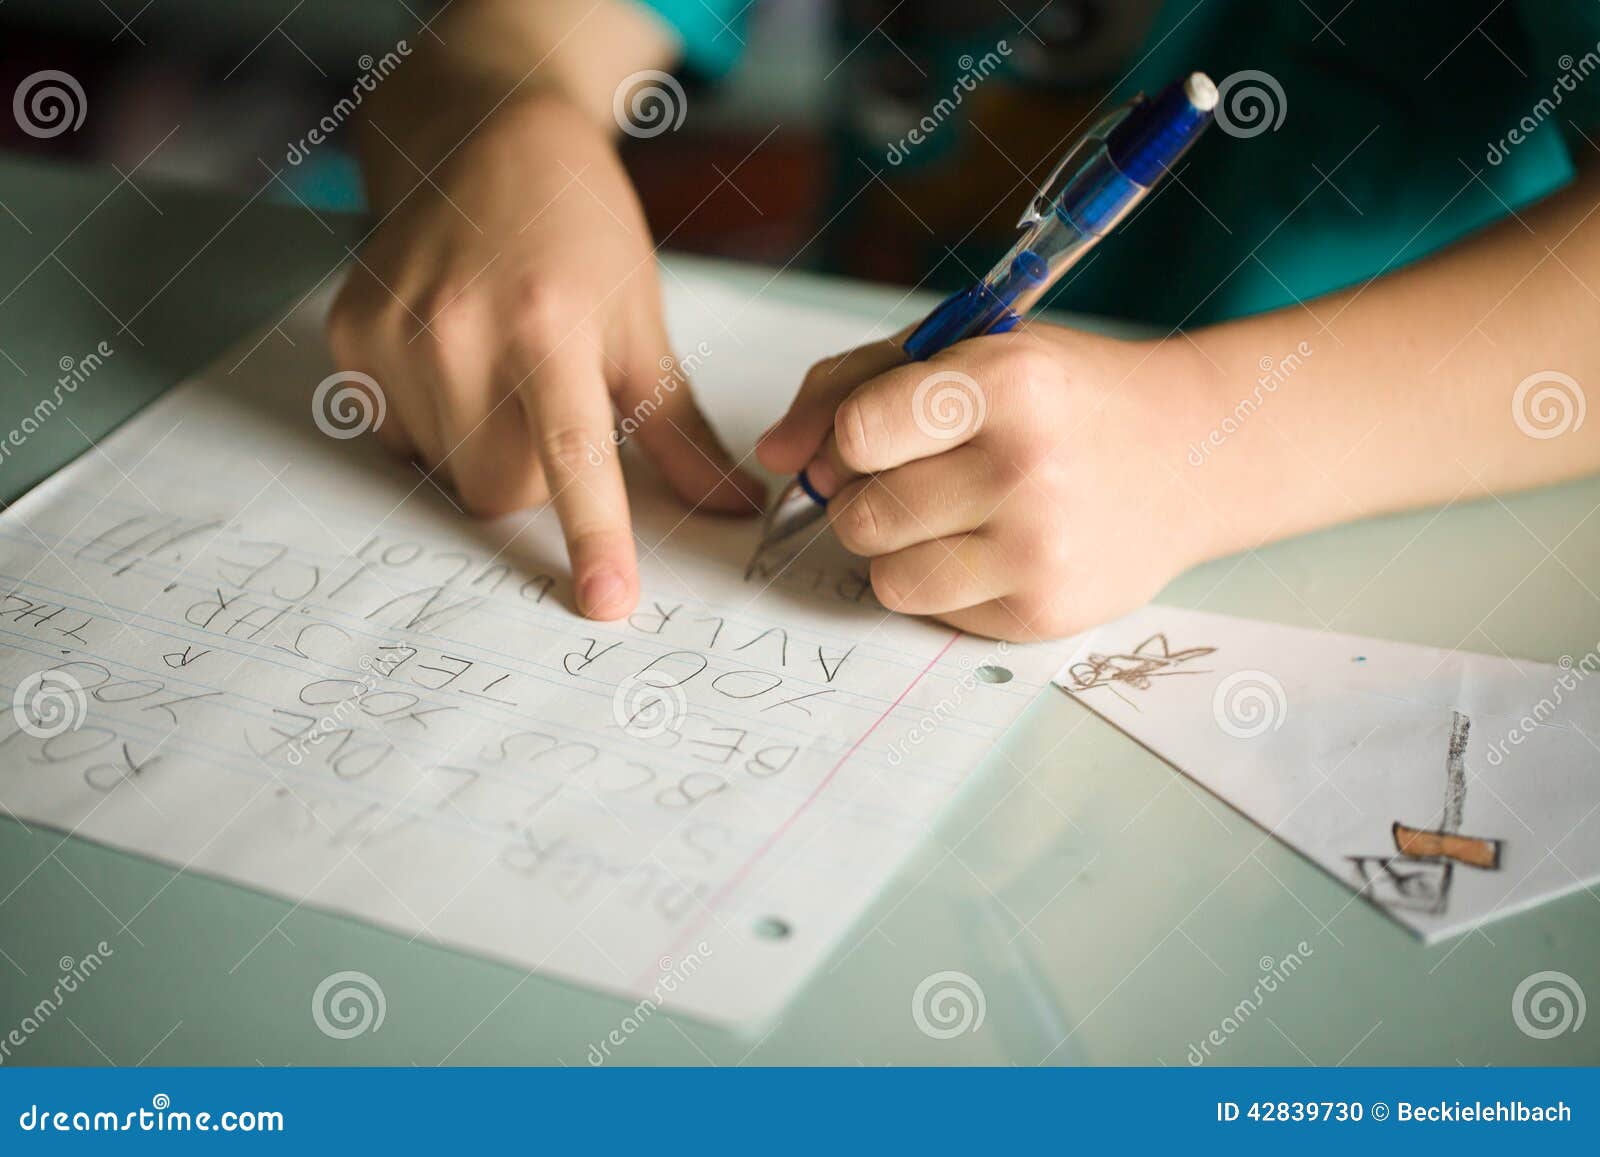 left handed boy writing